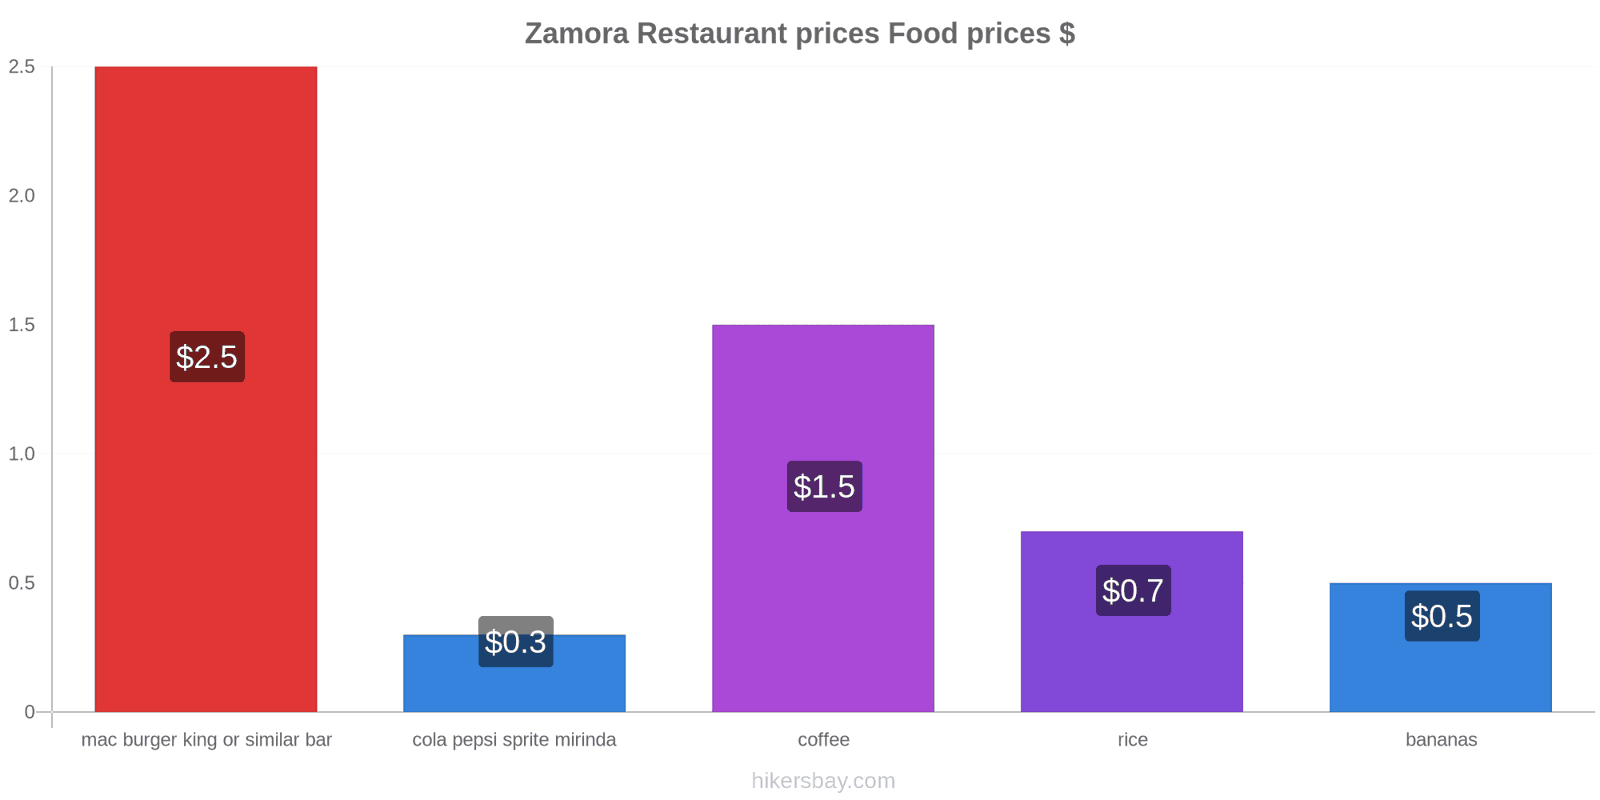 Zamora price changes hikersbay.com